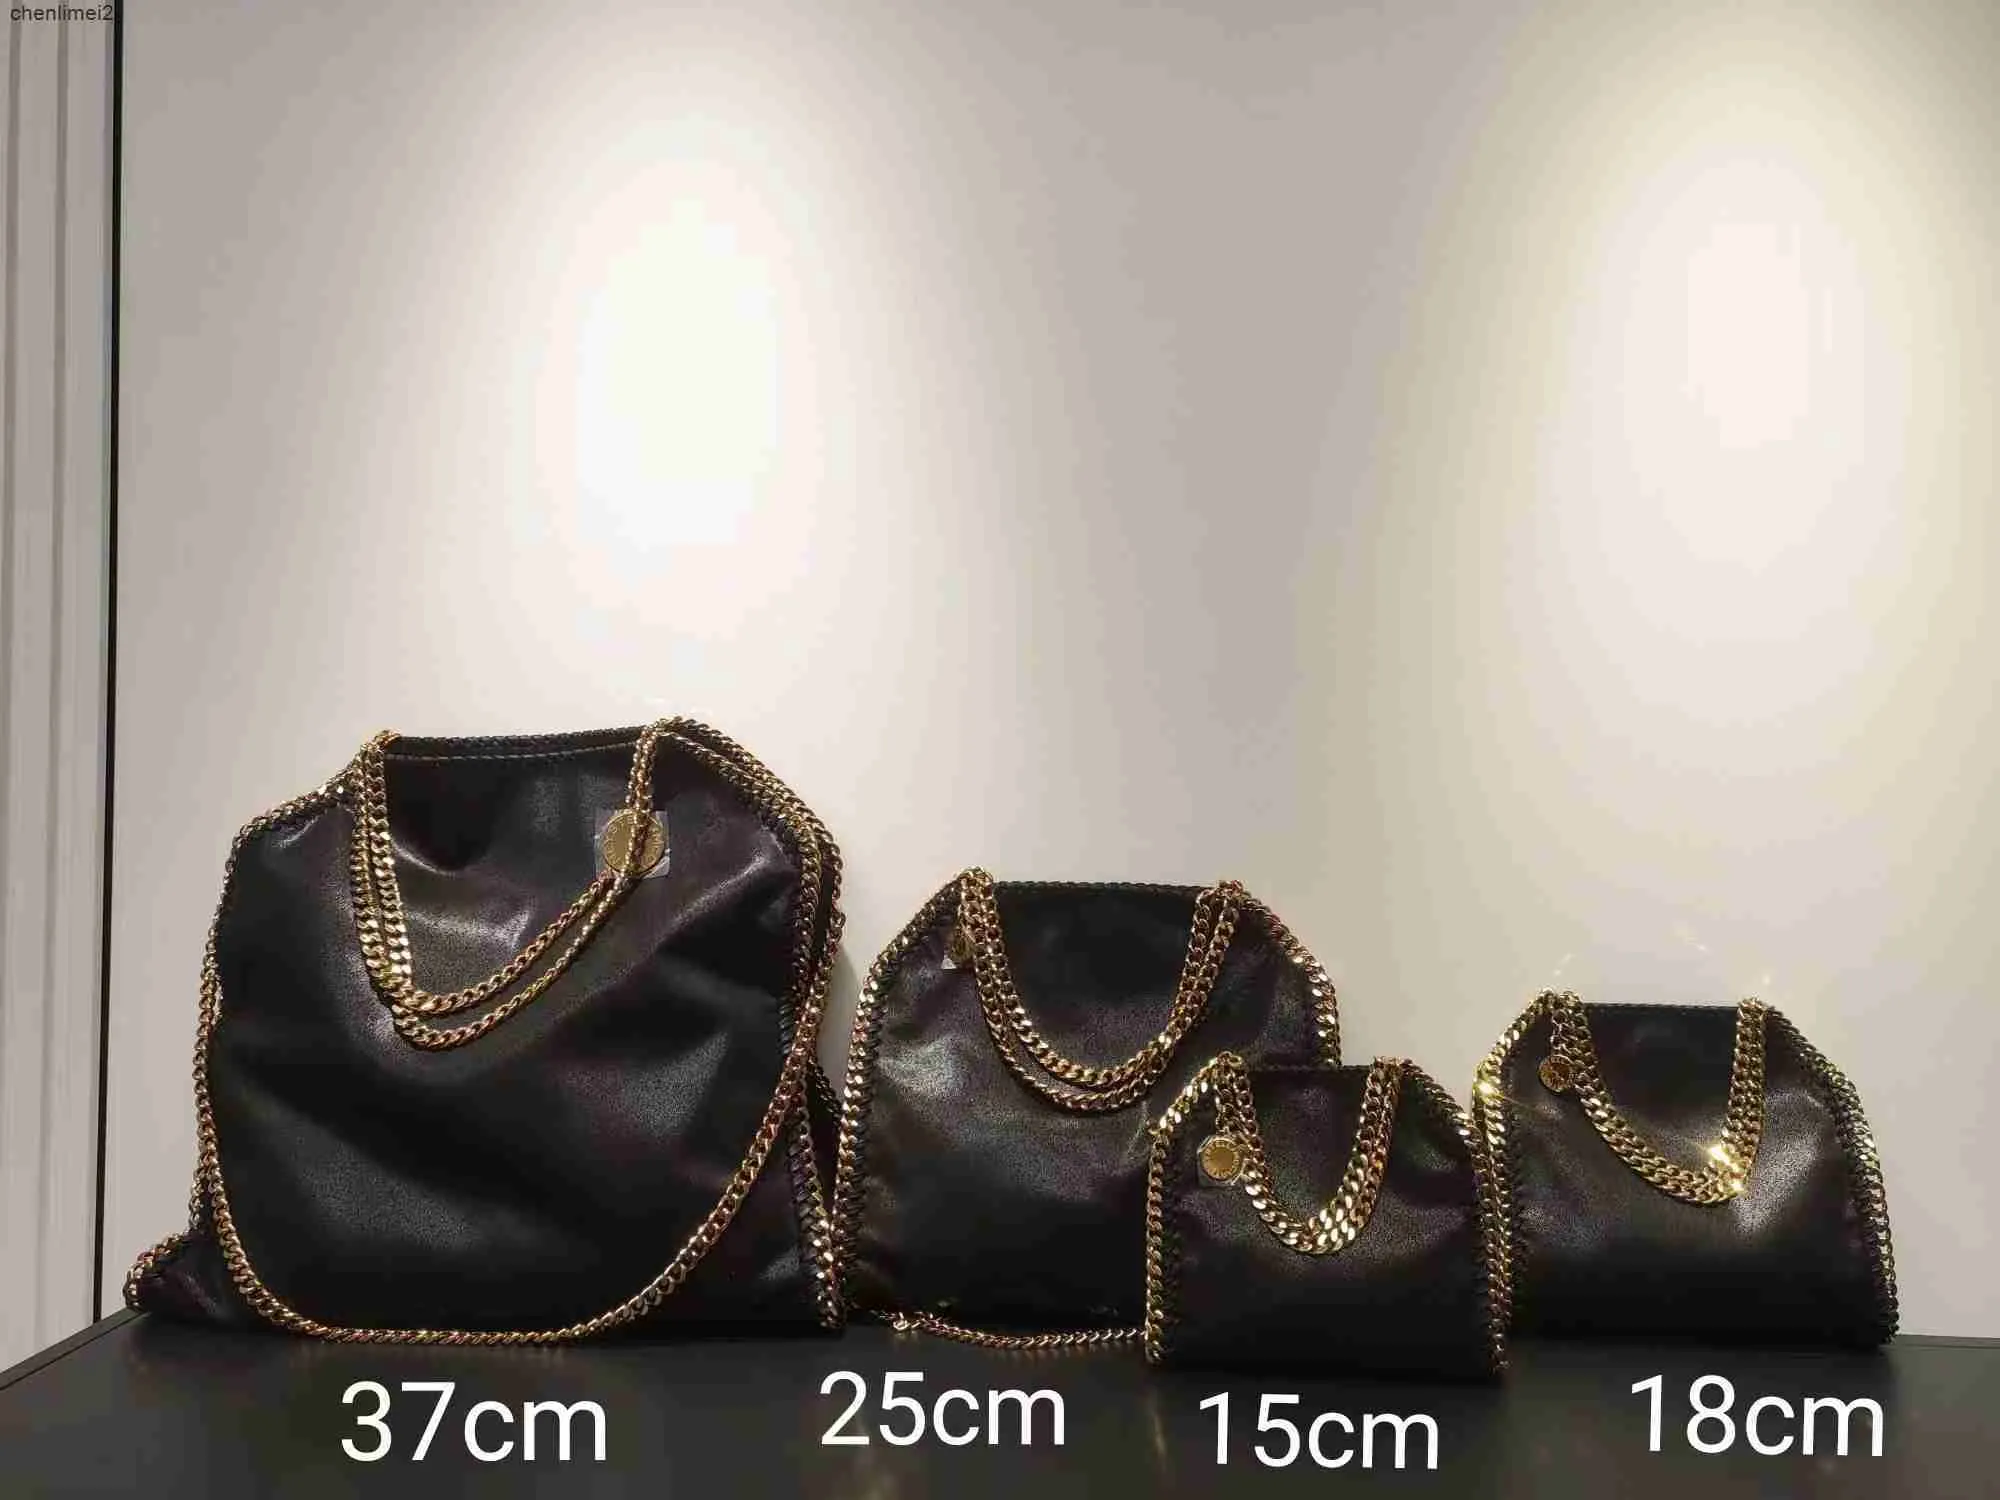 Sacs à bandoulins sac fourre-tout sac stella mccartney falabella luxe grandes femmes crossbody classique petite sac à main